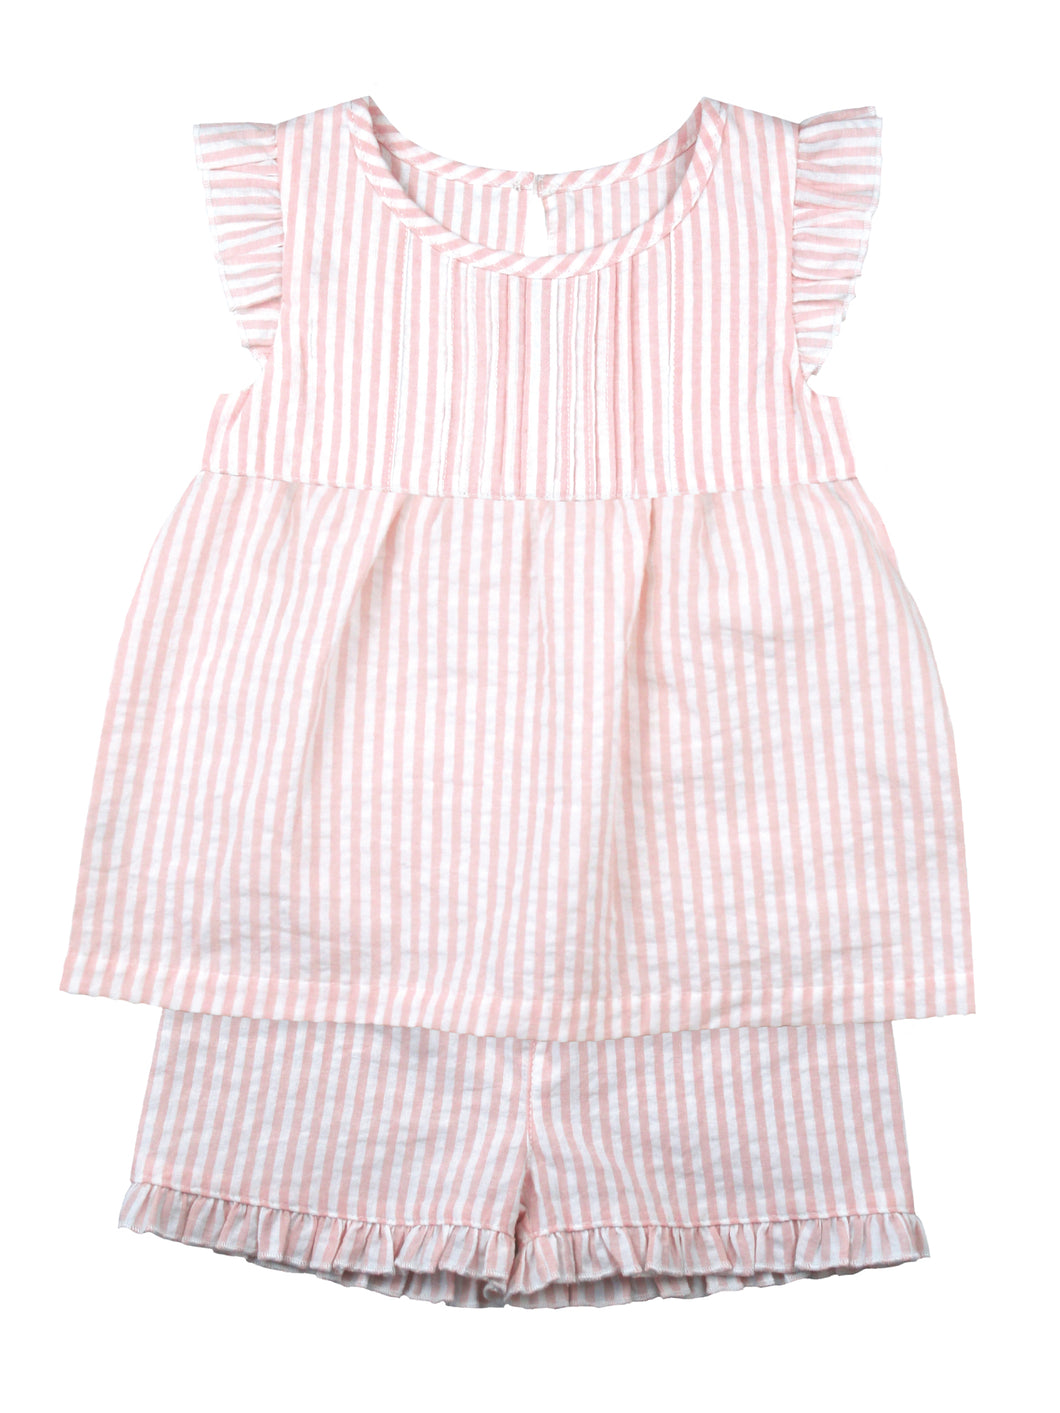 Pink / White Stripe Seersucker Shortie Pyjamas